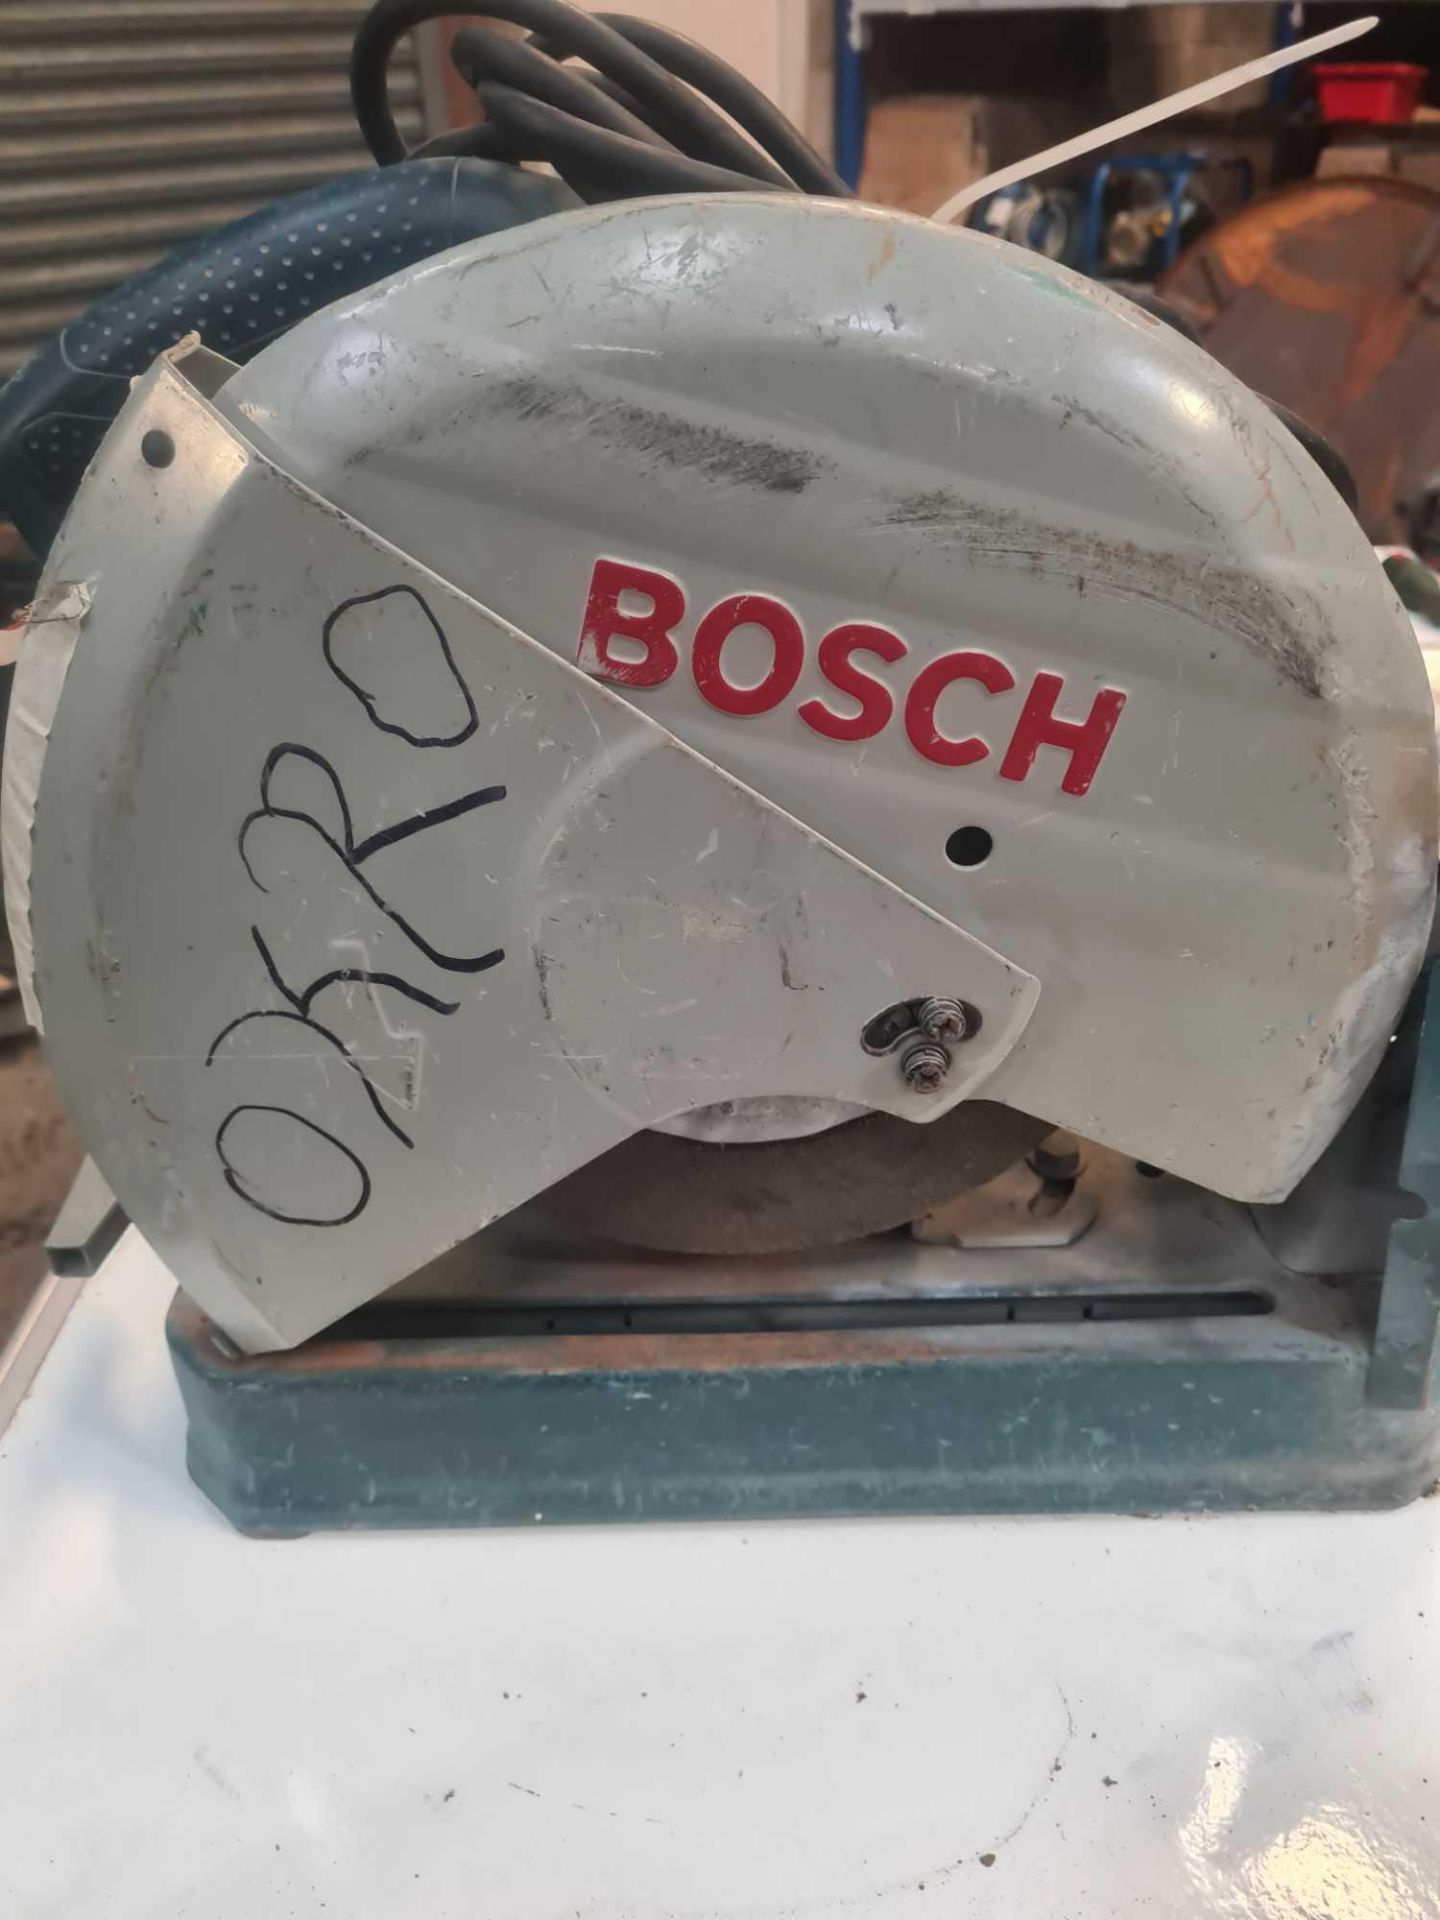 Bosch bench cut of saw 110v - Image 2 of 3